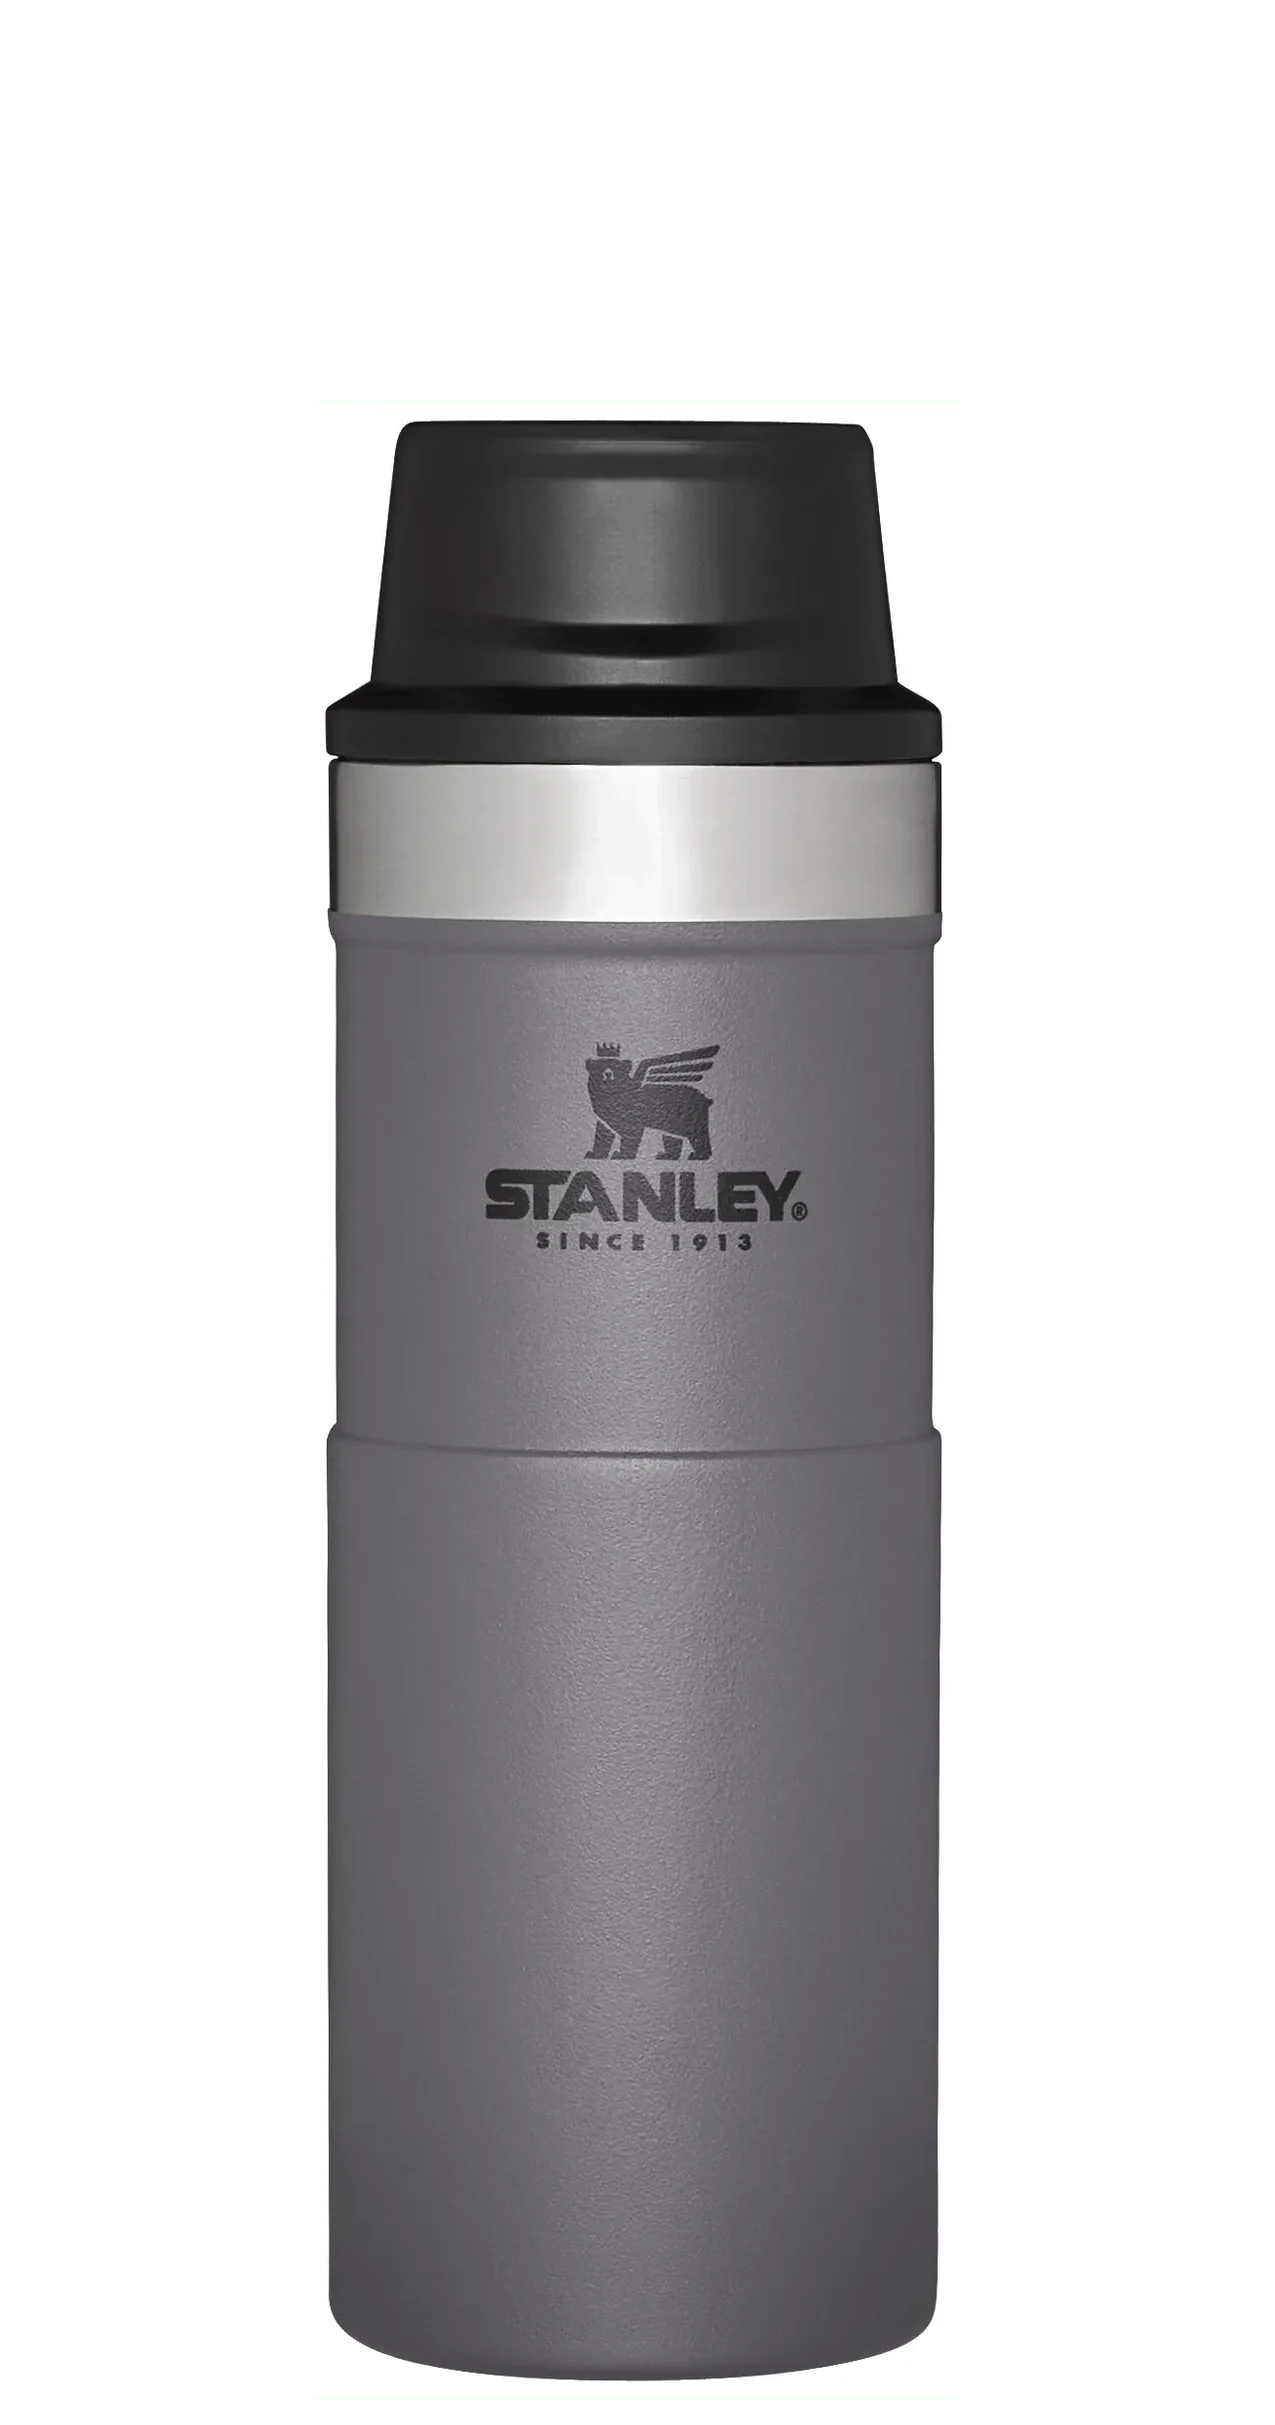 Stanley 16oz Stainless Steel AeroLight Transit Bottle - Fog Glimmer